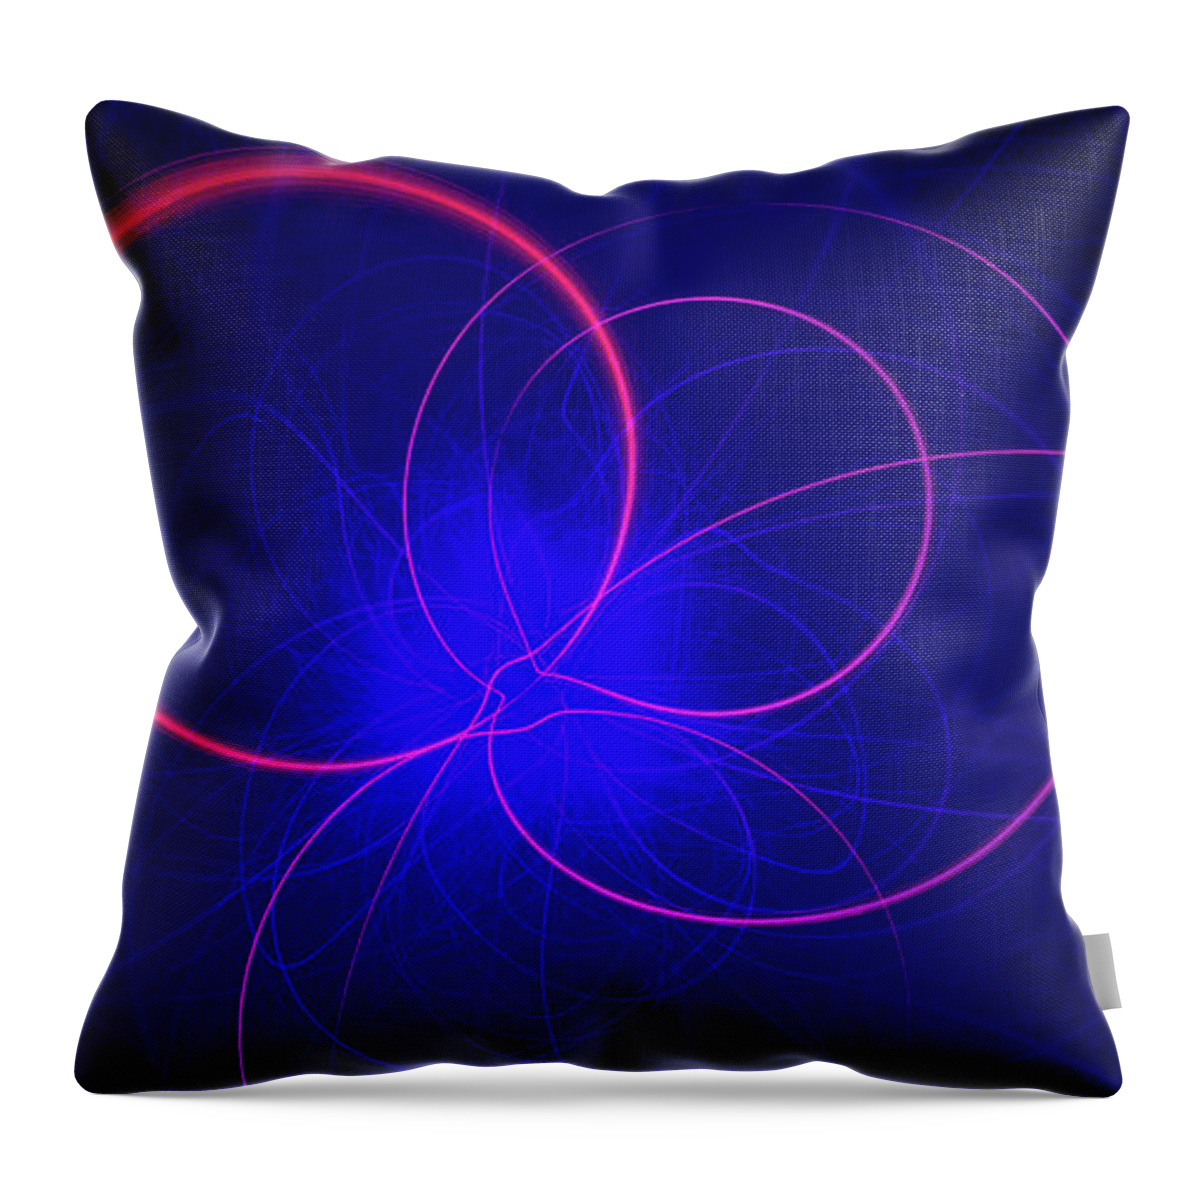 Rick Drent Throw Pillow featuring the digital art Loop by Rick Drent